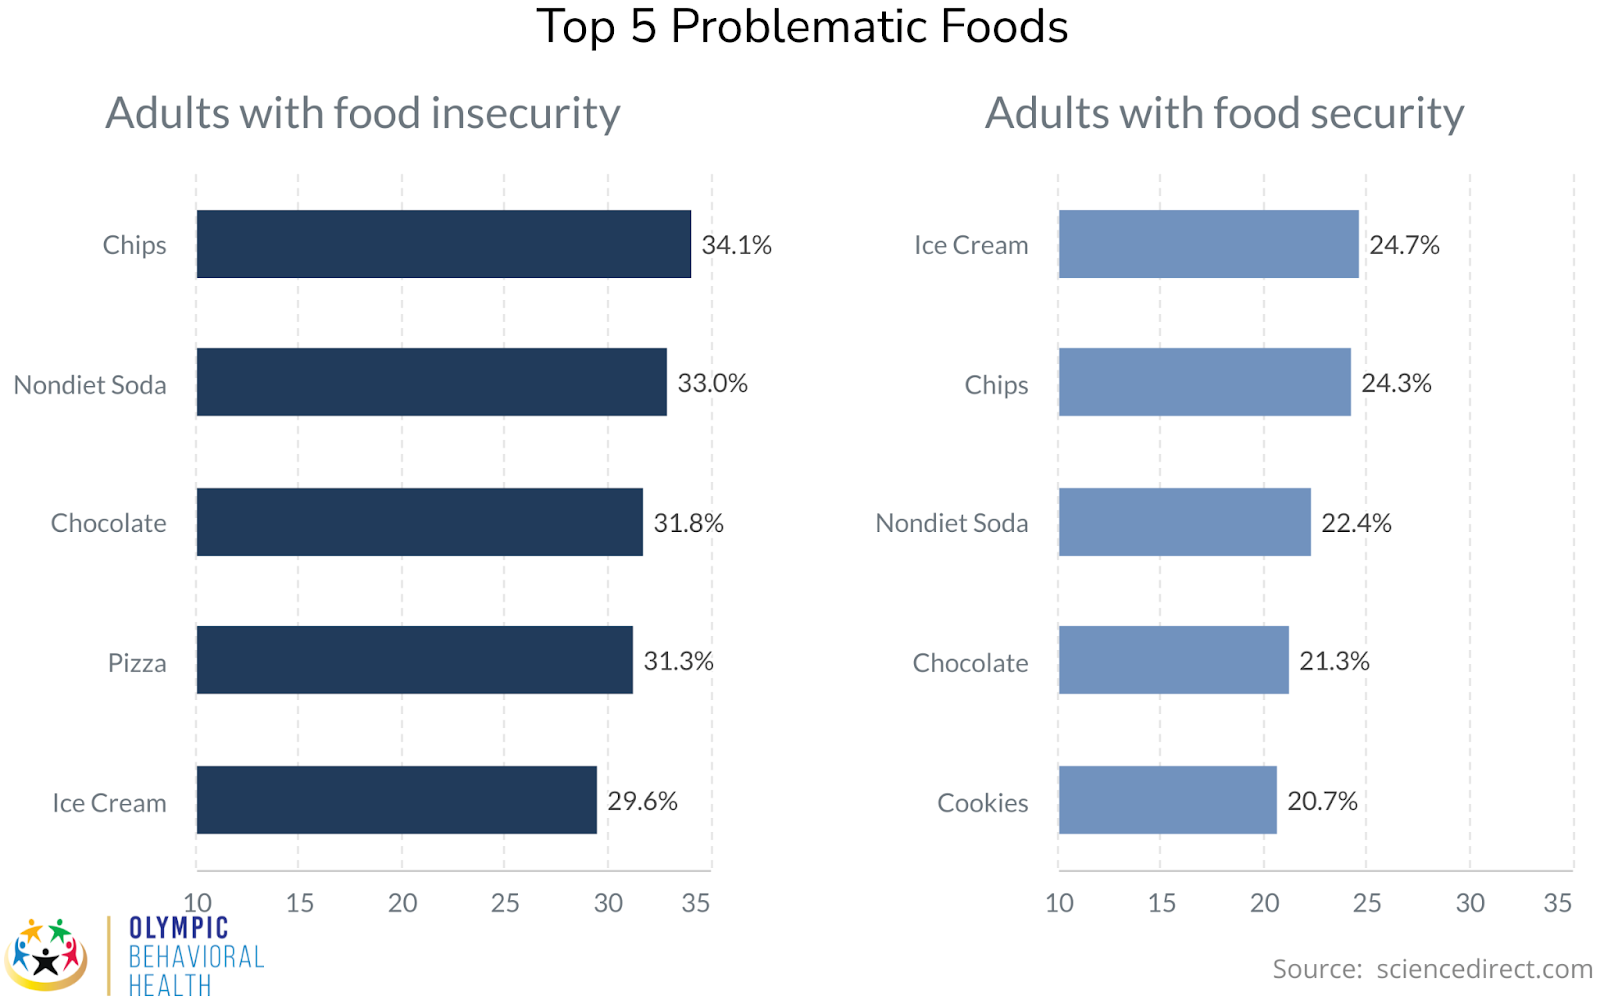 Top 5 Problematic Foods